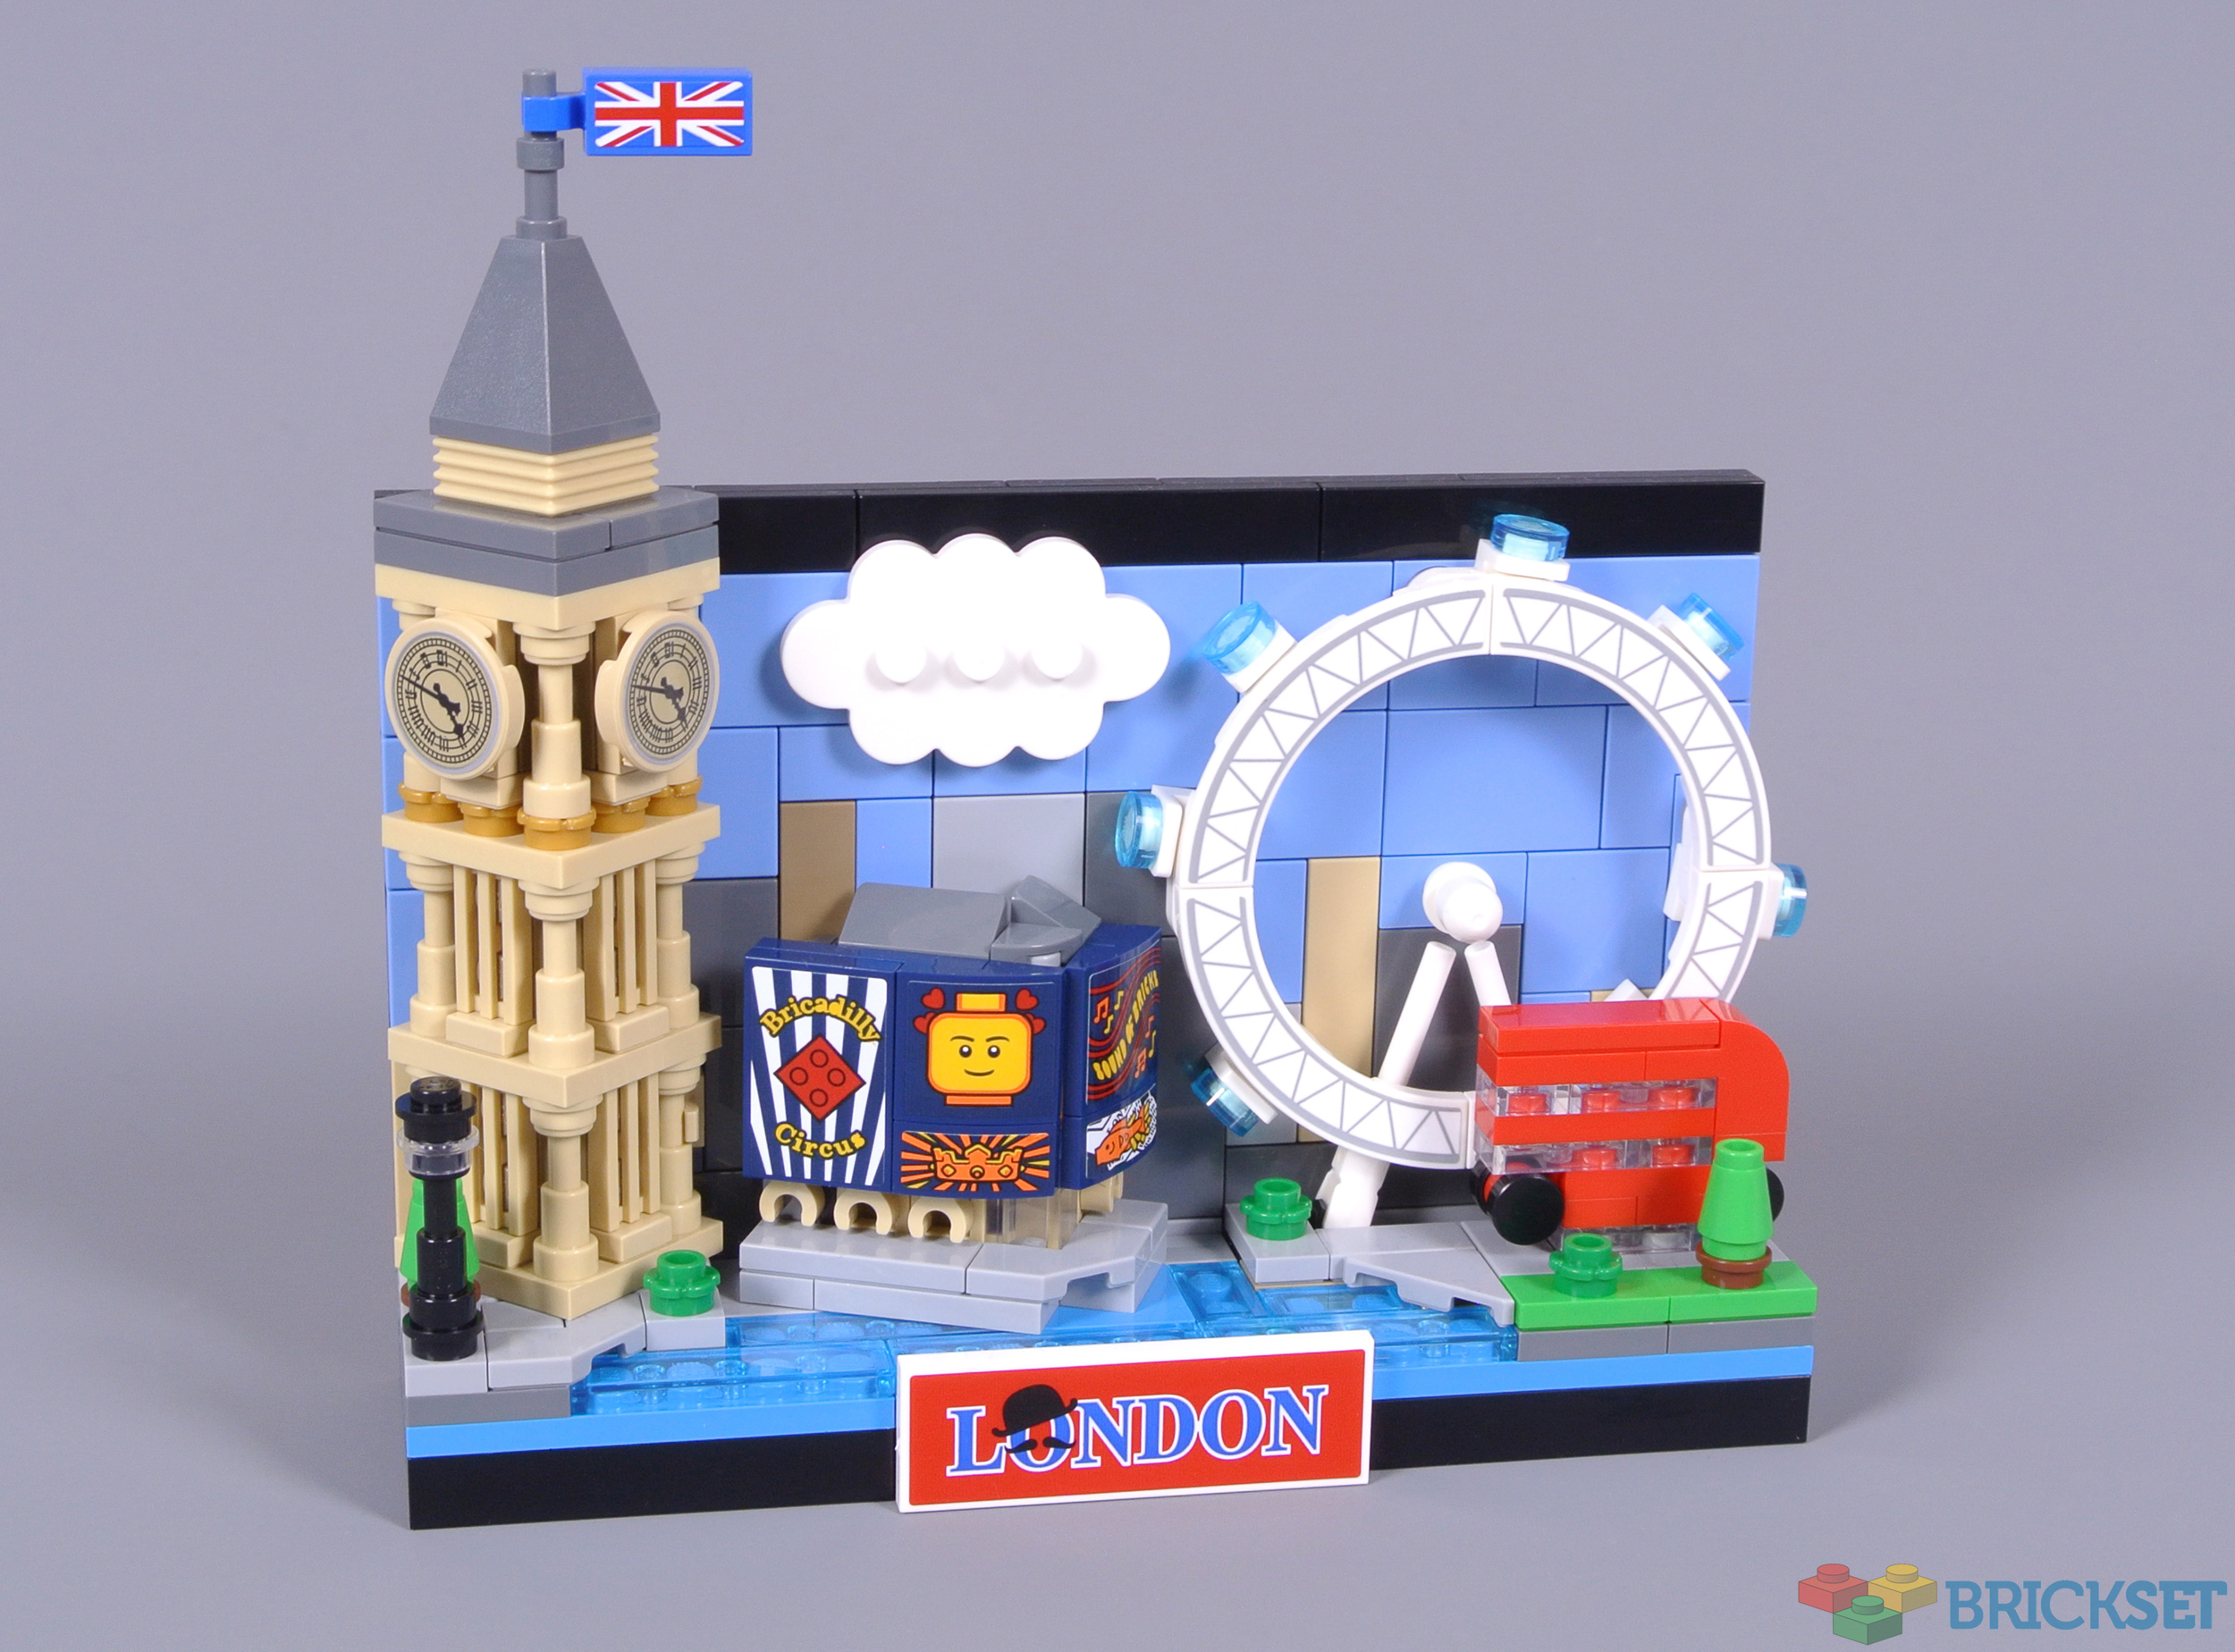 LEGO Creator 40568 Paris and 40569 London Postcards: Review